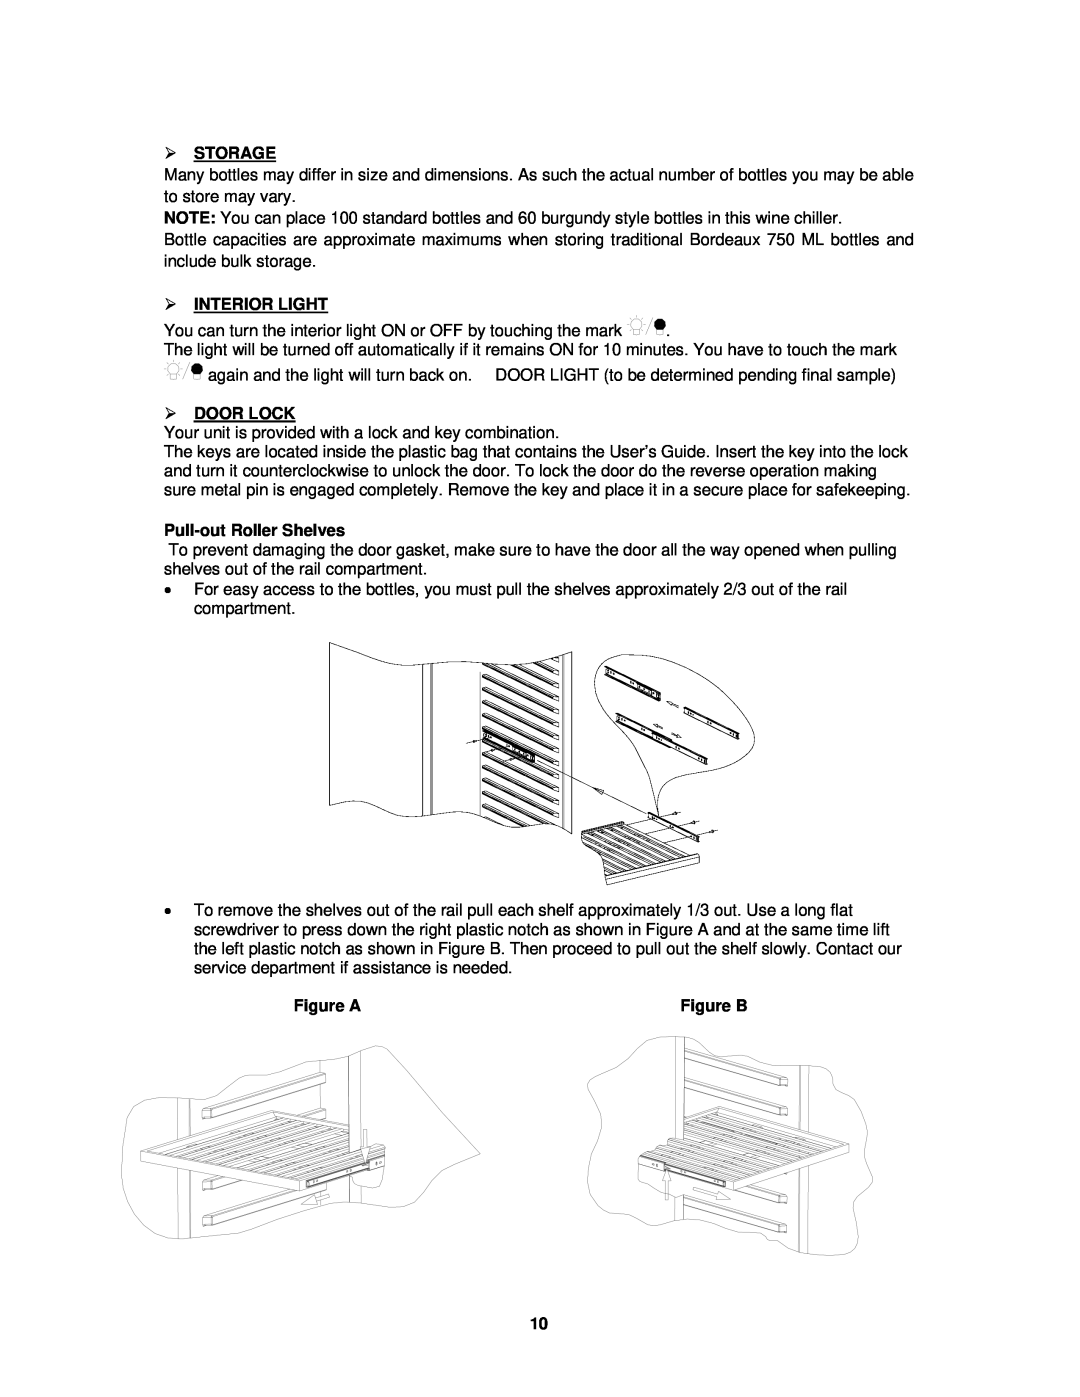 Avanti WCR684C instruction manual  Storage,  Interior Light,  Door Lock, Pull-out Roller Shelves, Figure A 